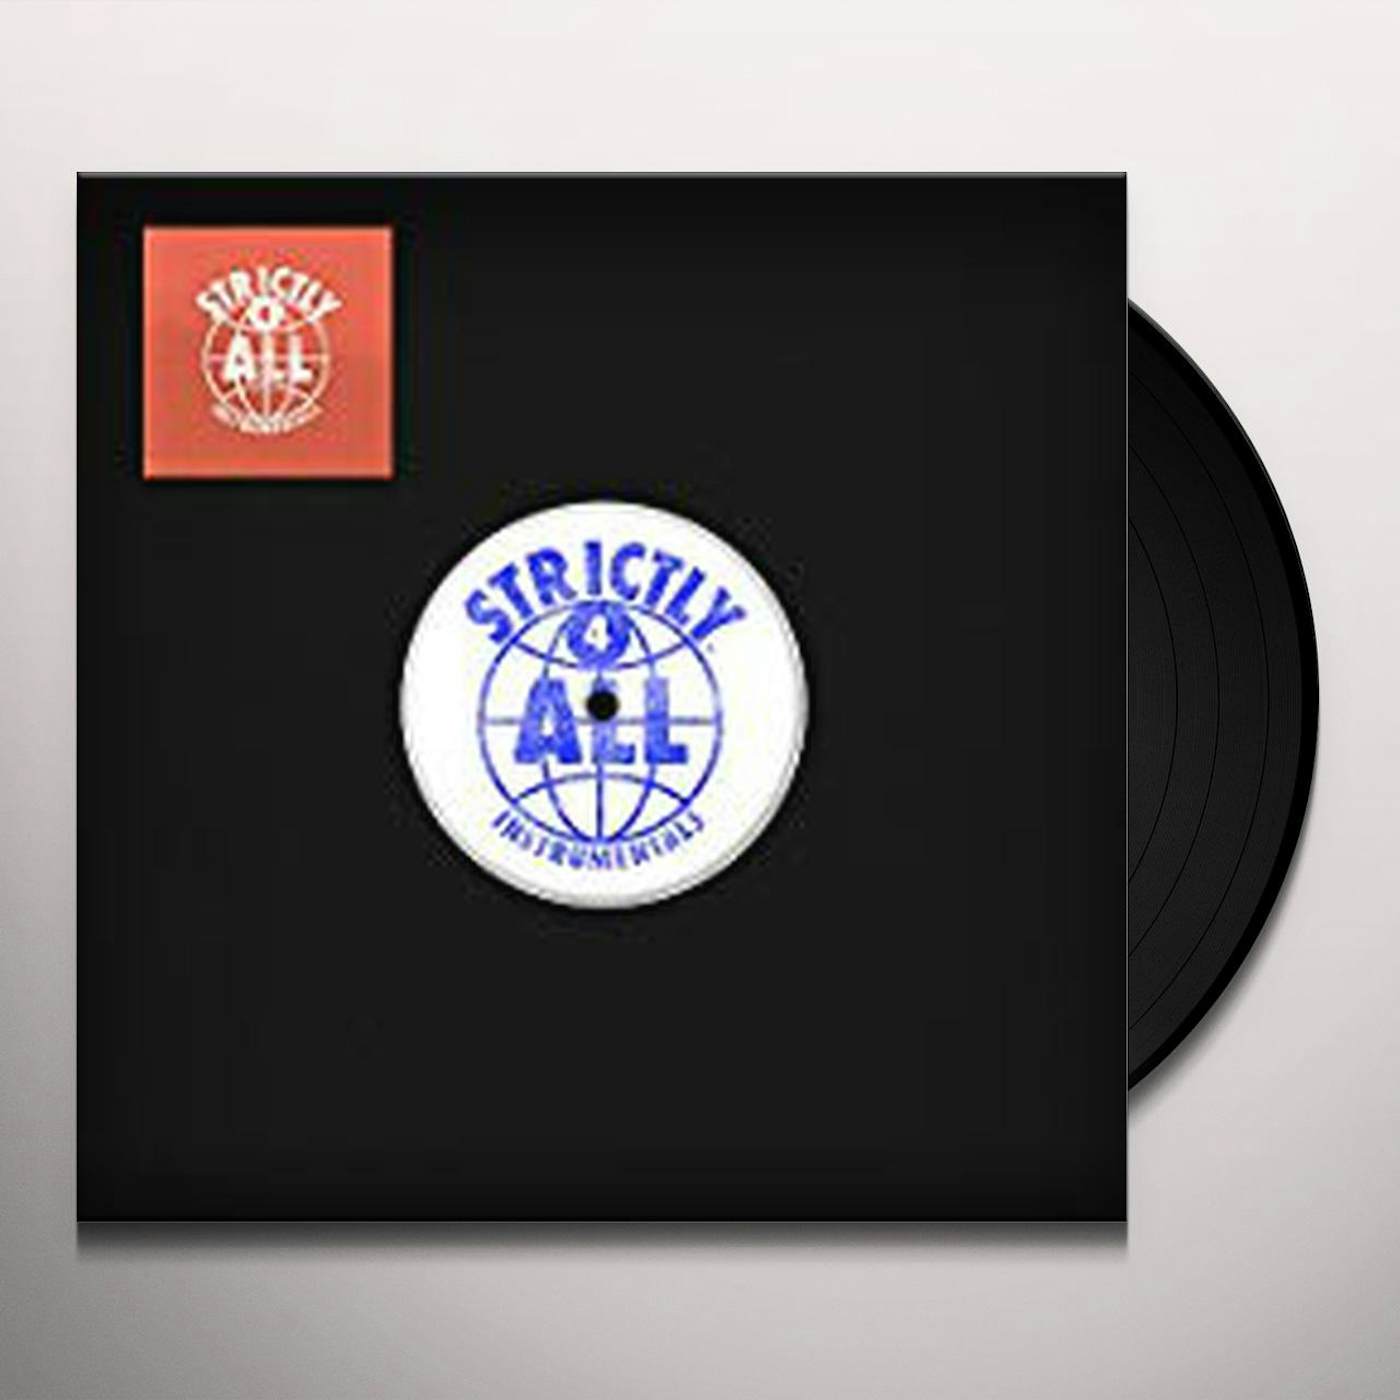 Teknical Development & Figub Brazlevic STRICTLY 4 ALL INSTRUMENTALS Vinyl Record